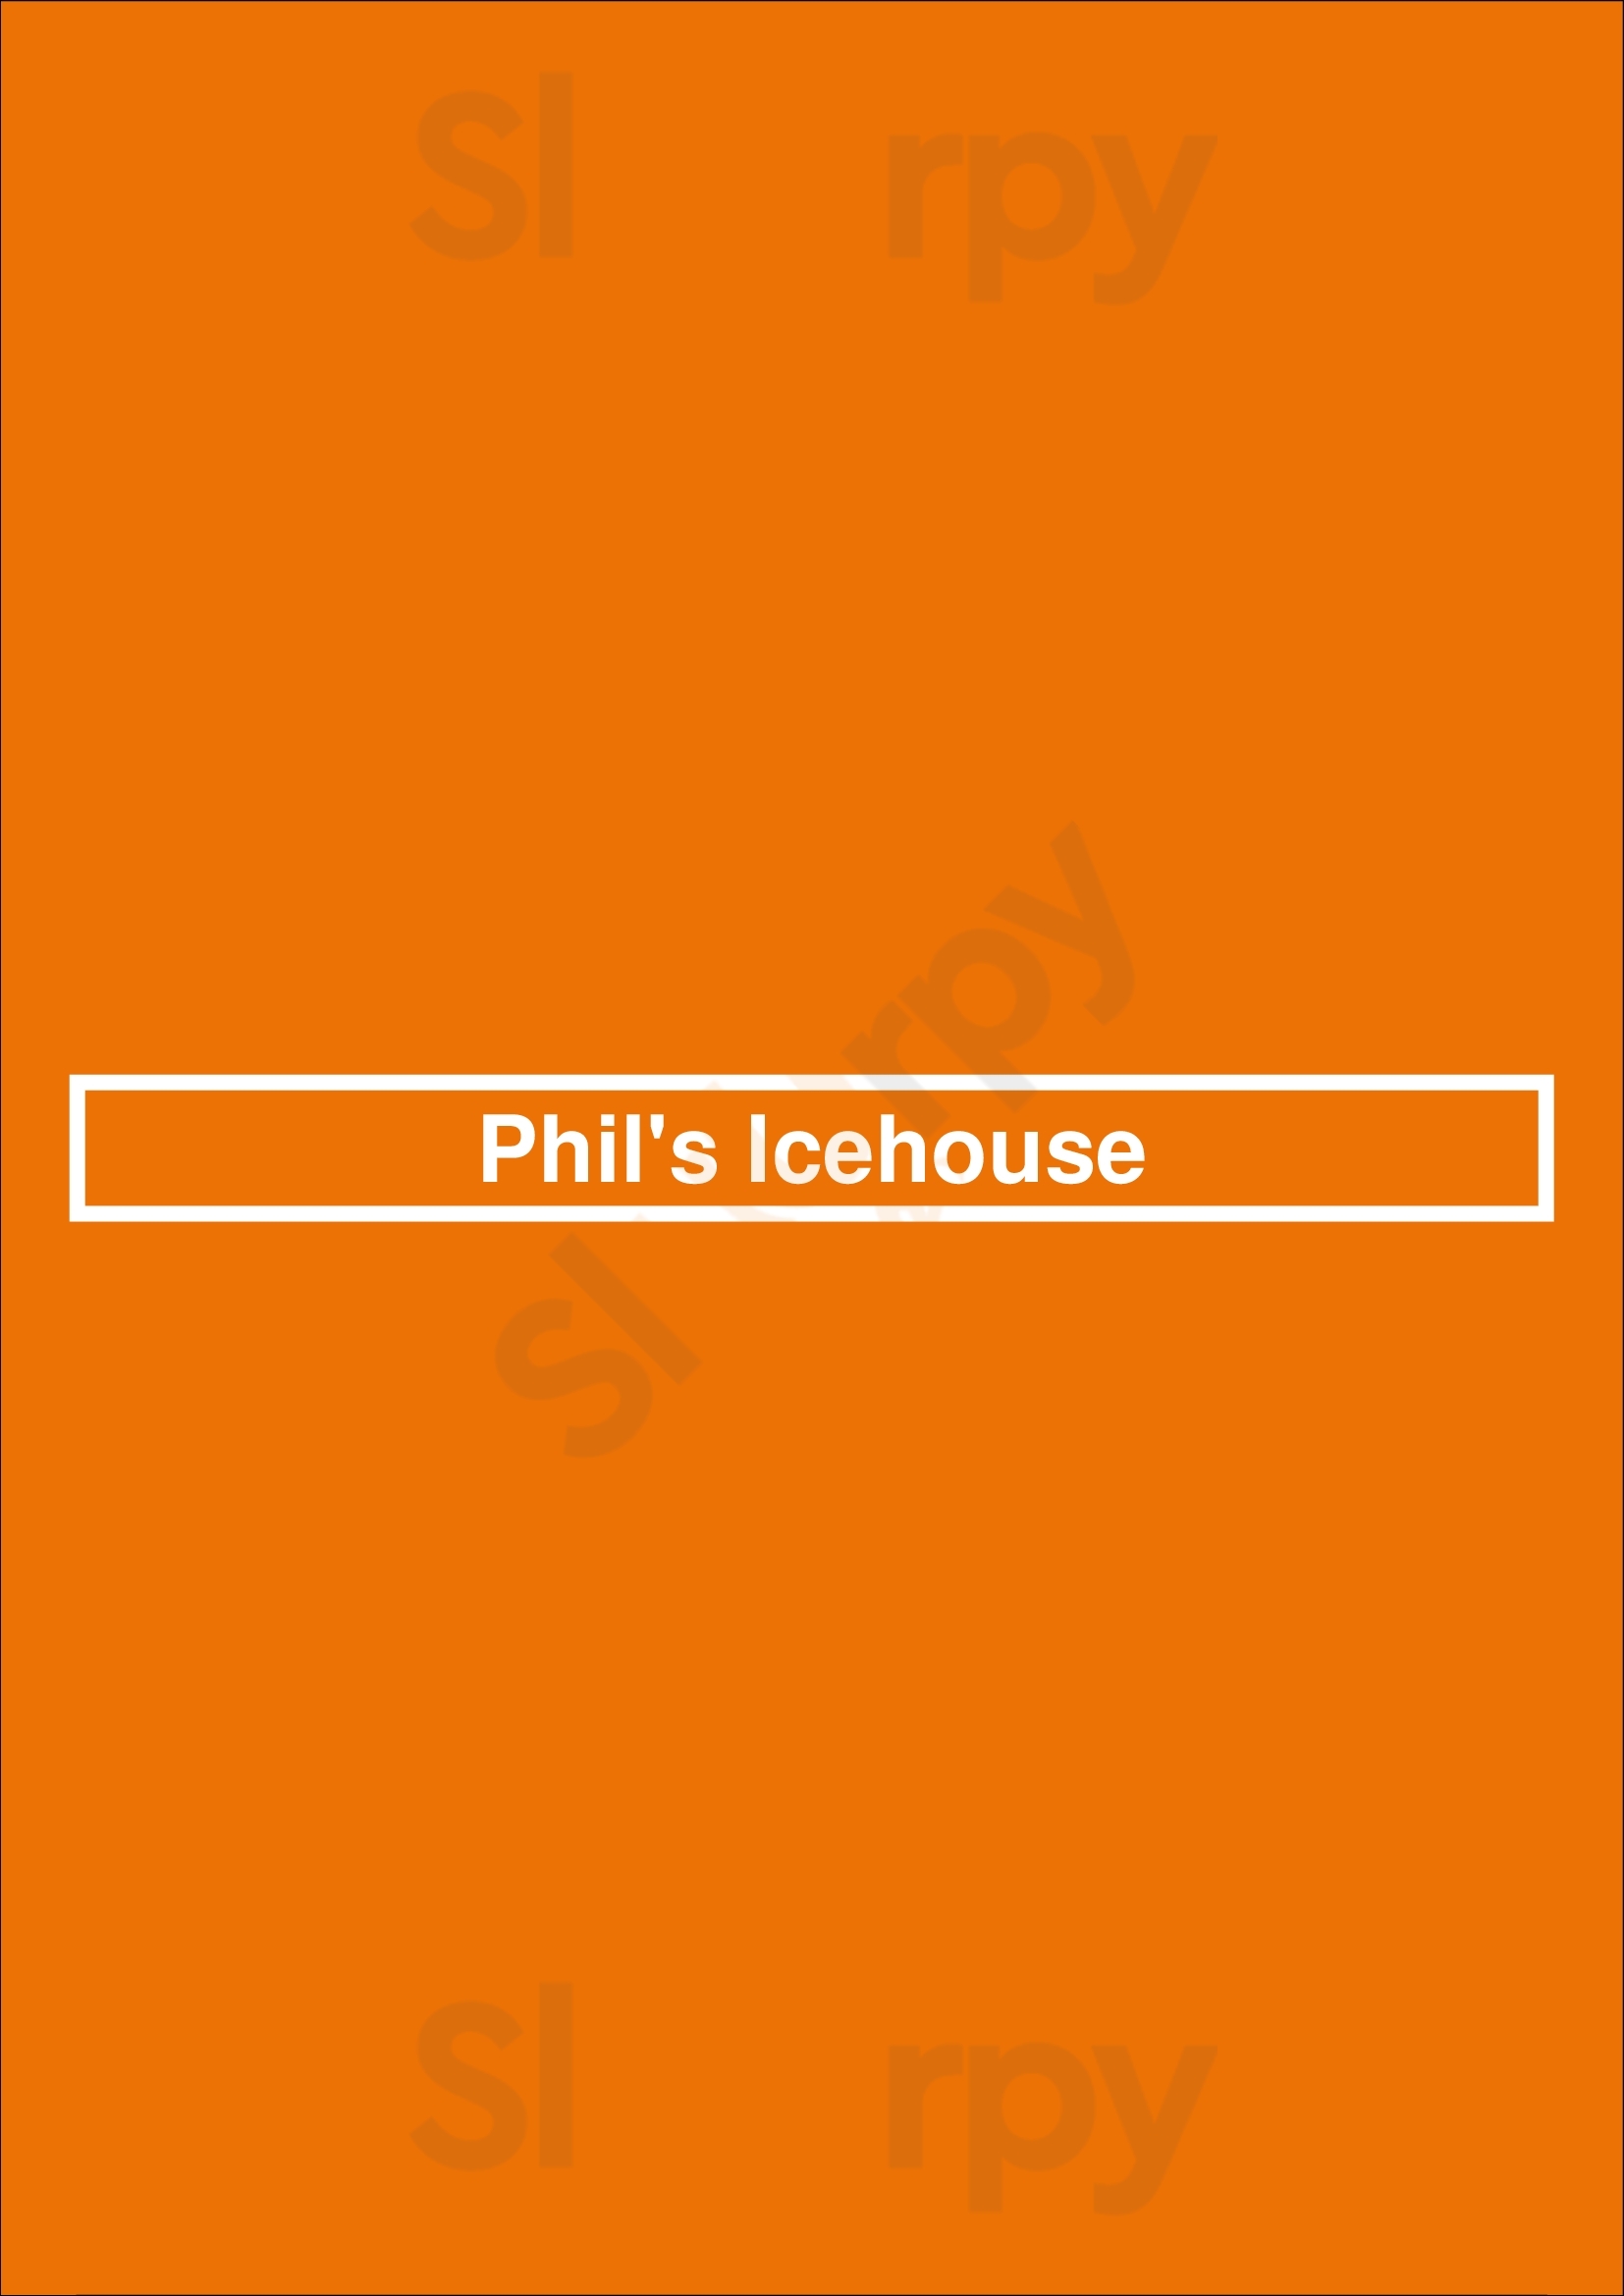 Phil's Icehouse Austin Menu - 1